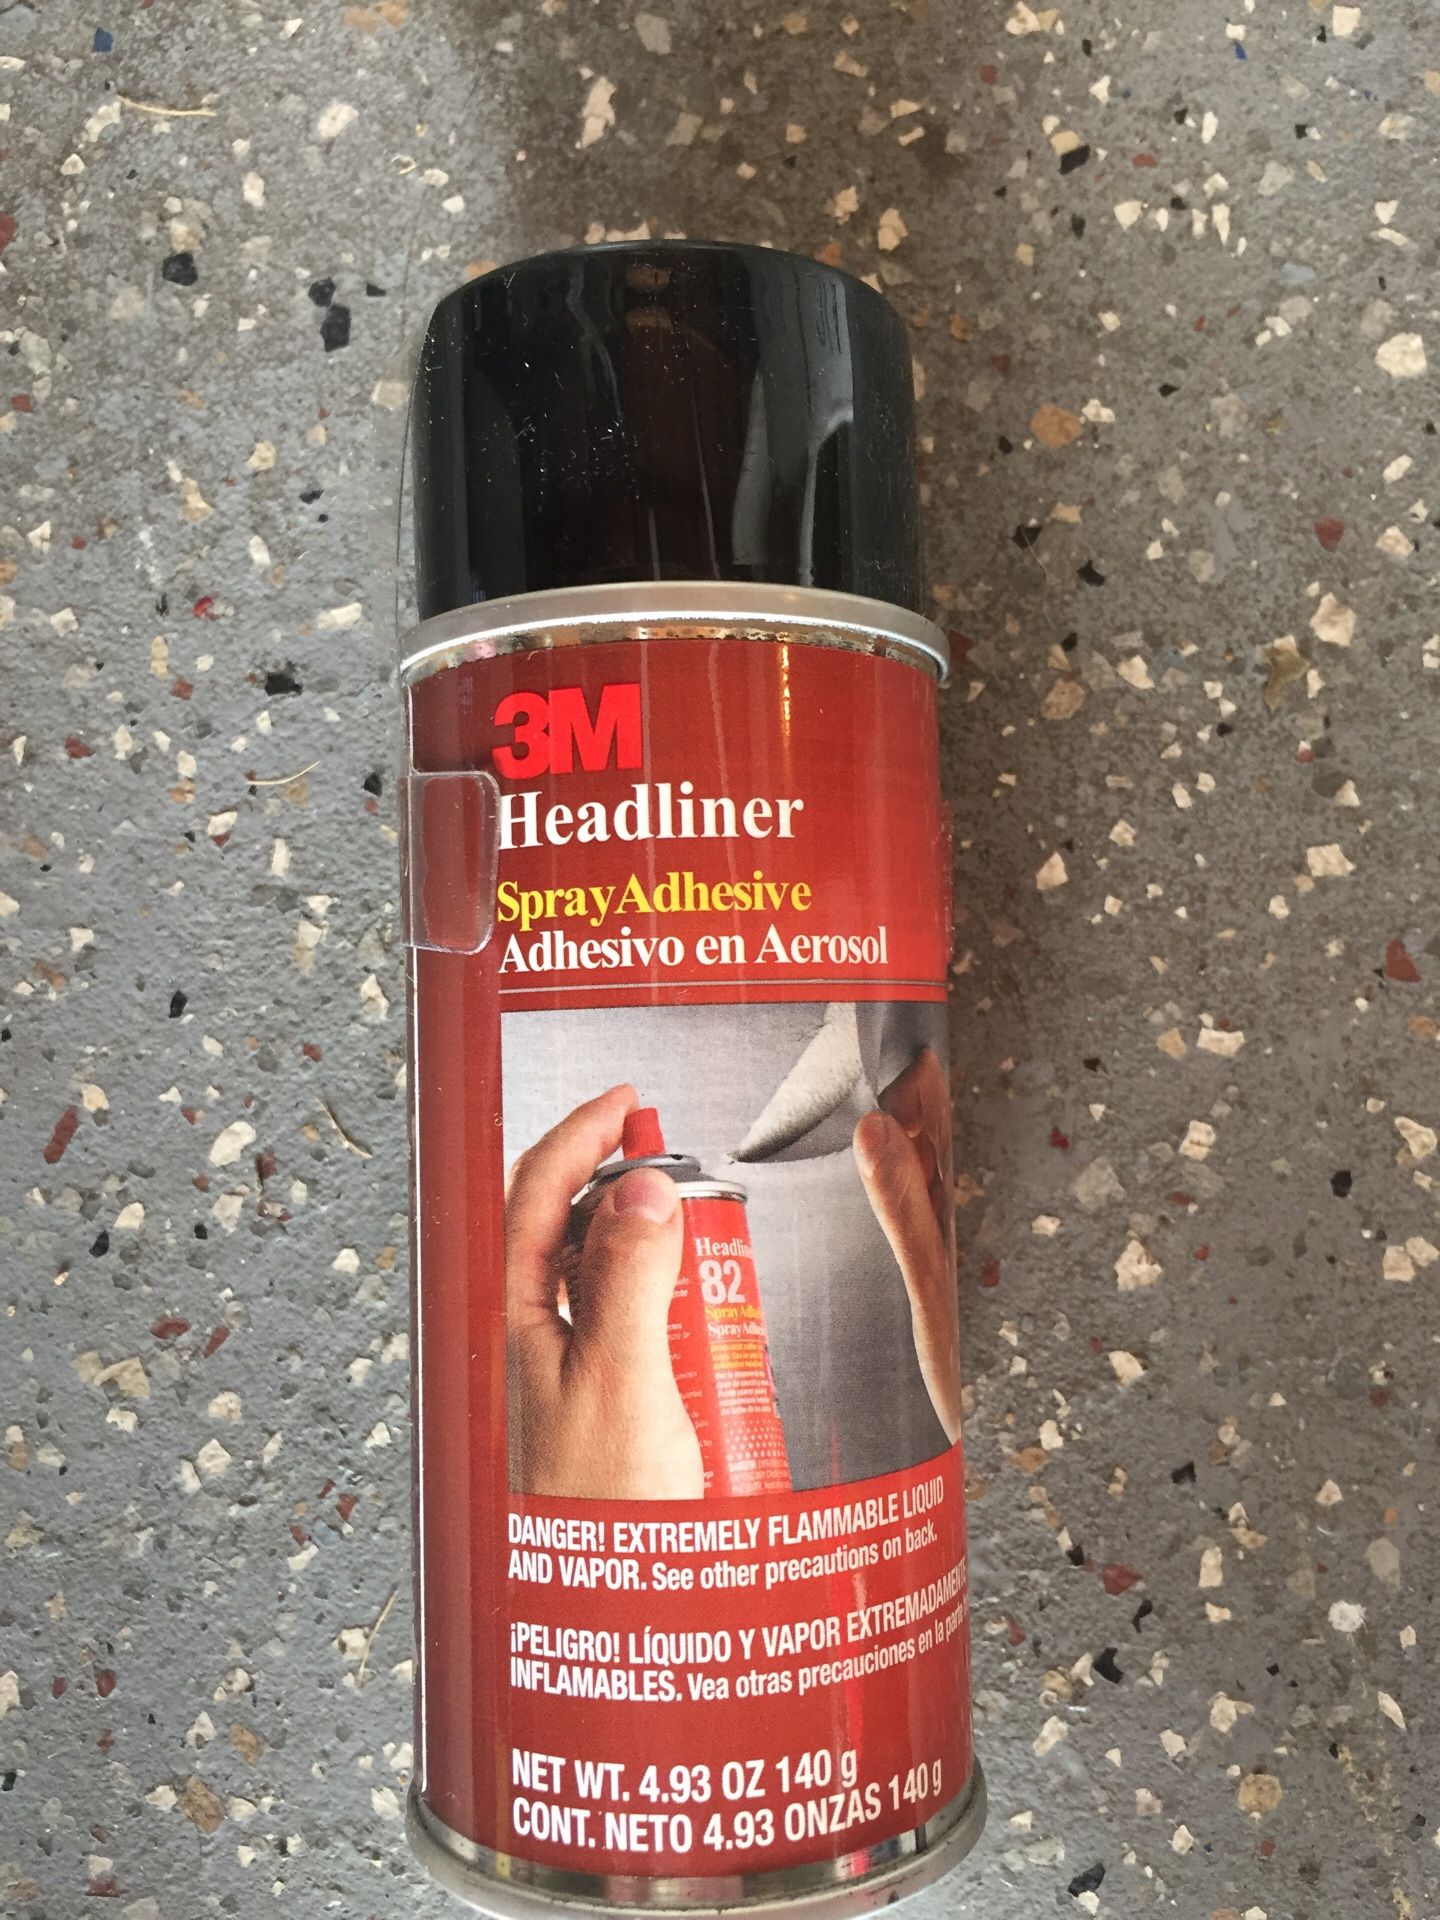 3M Headliner Spray Adhesive